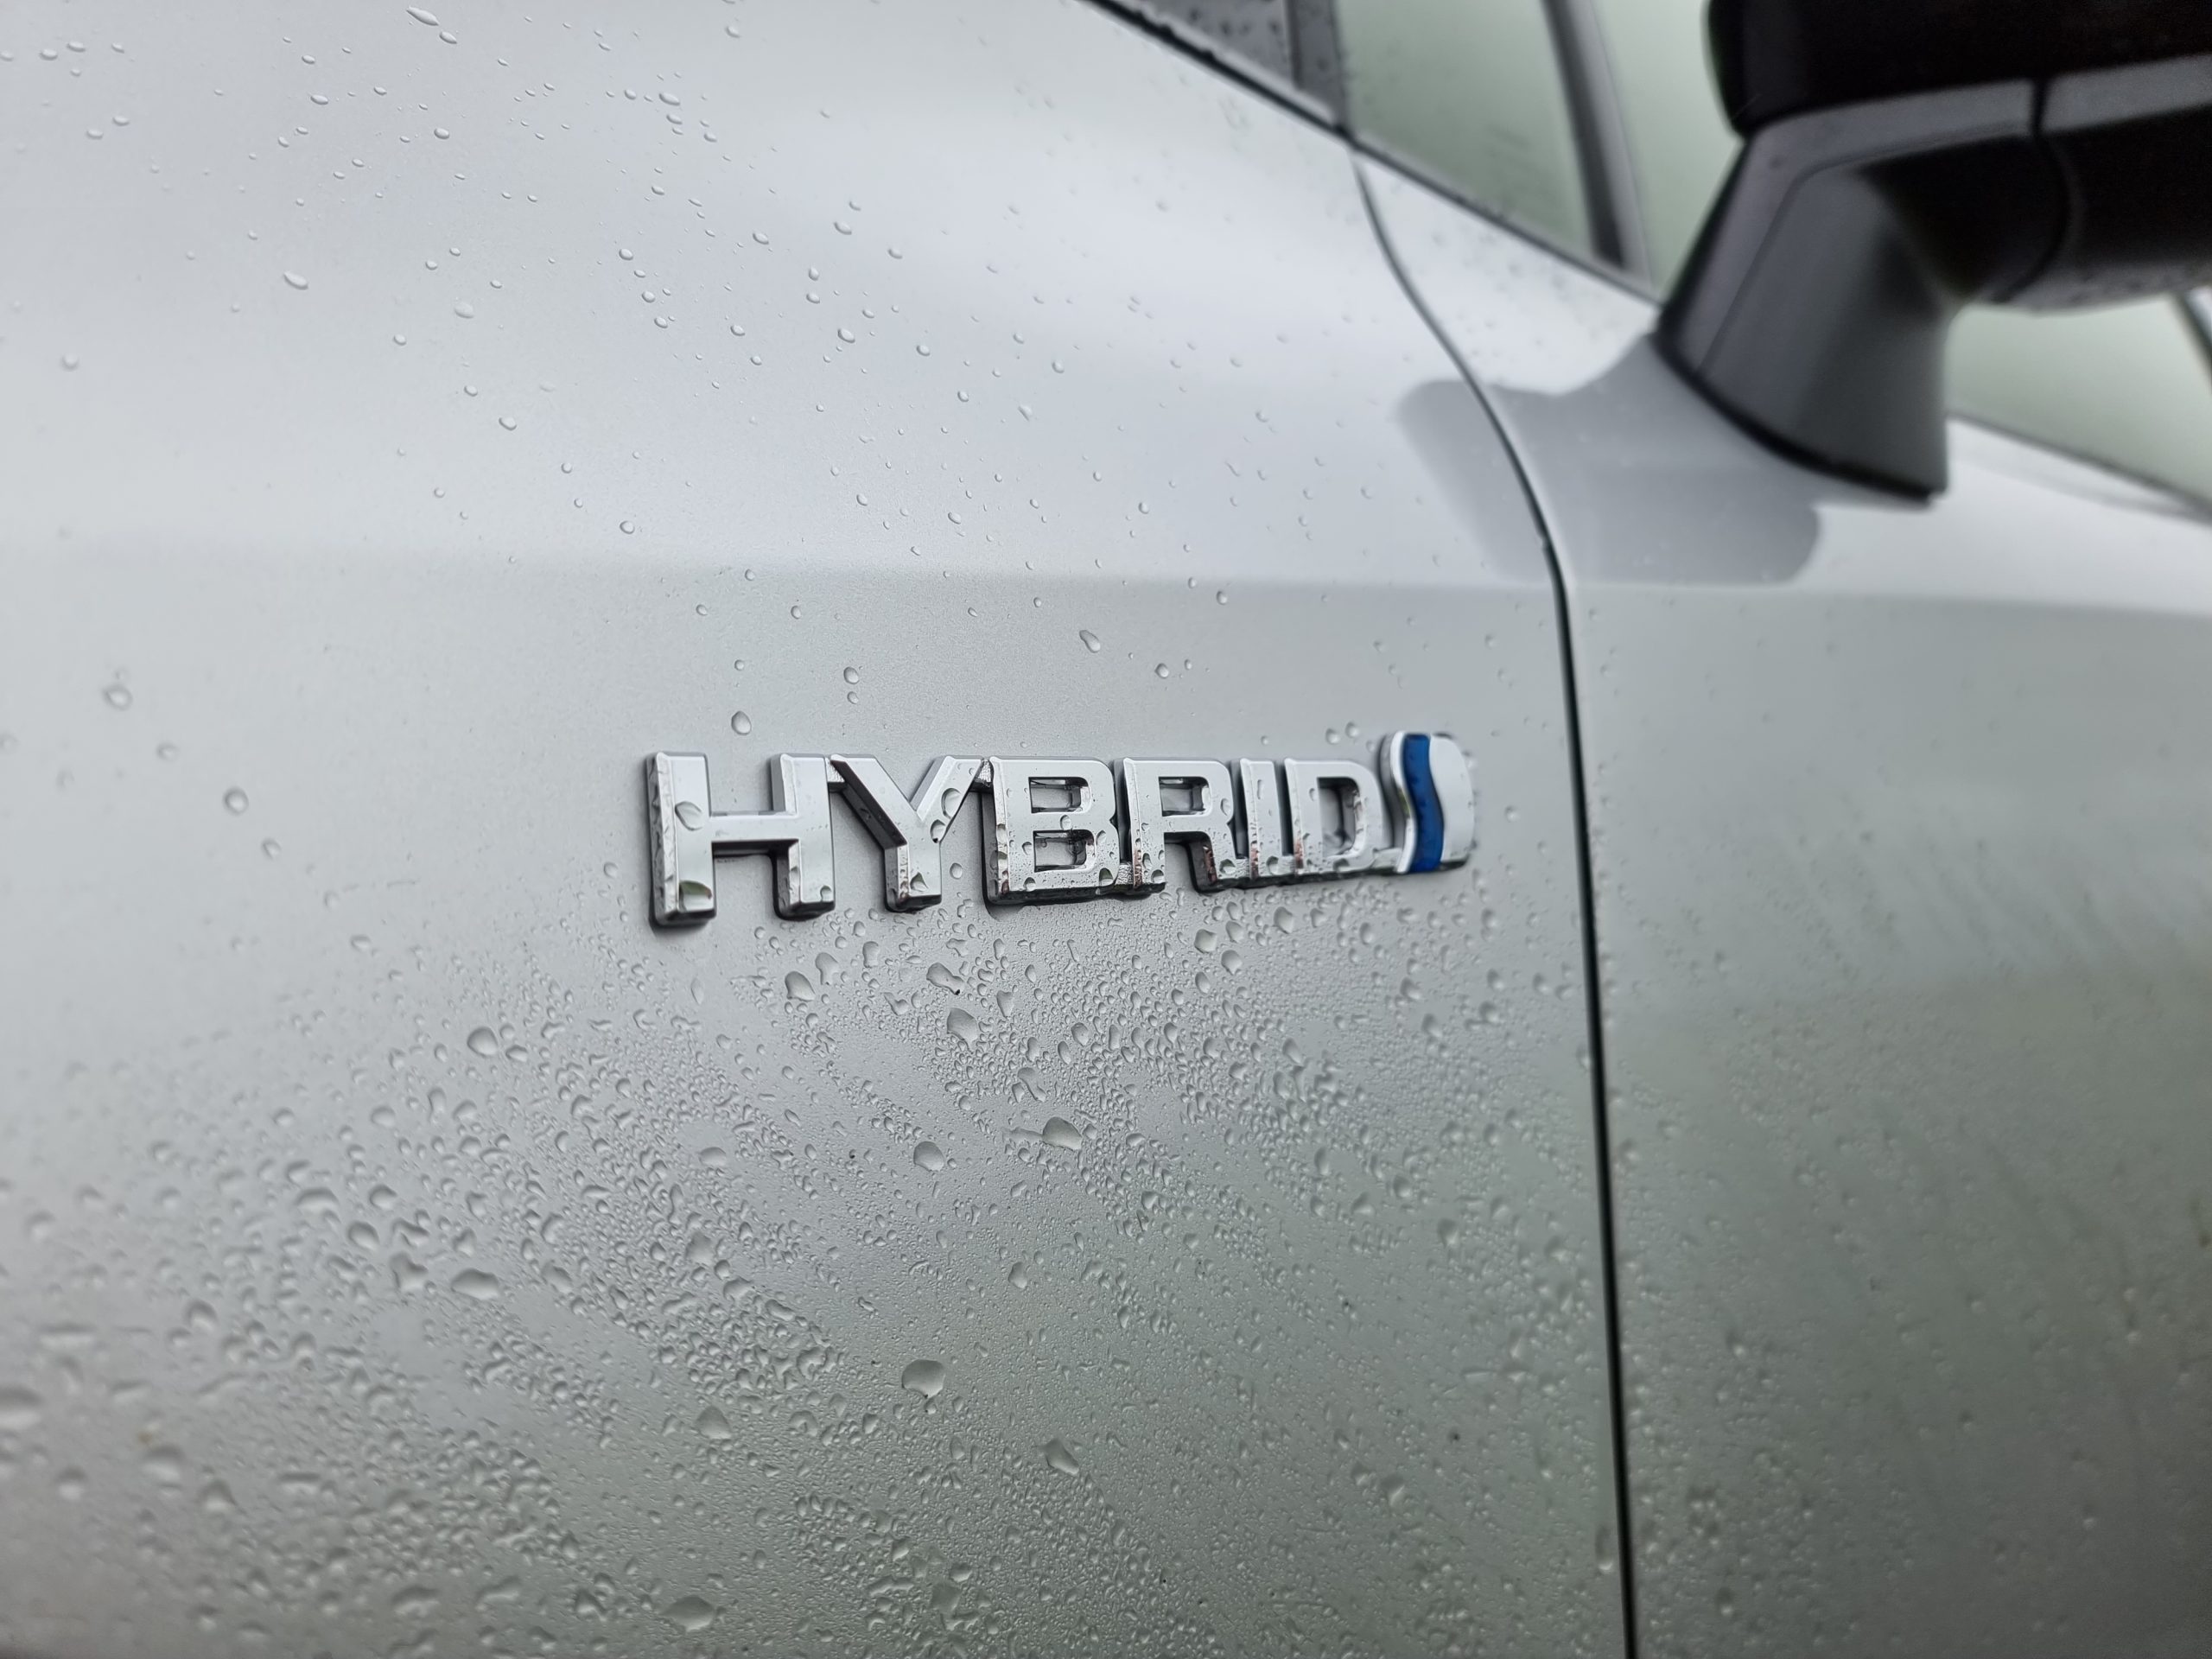 2022 Toyota Corolla Hybrid logo